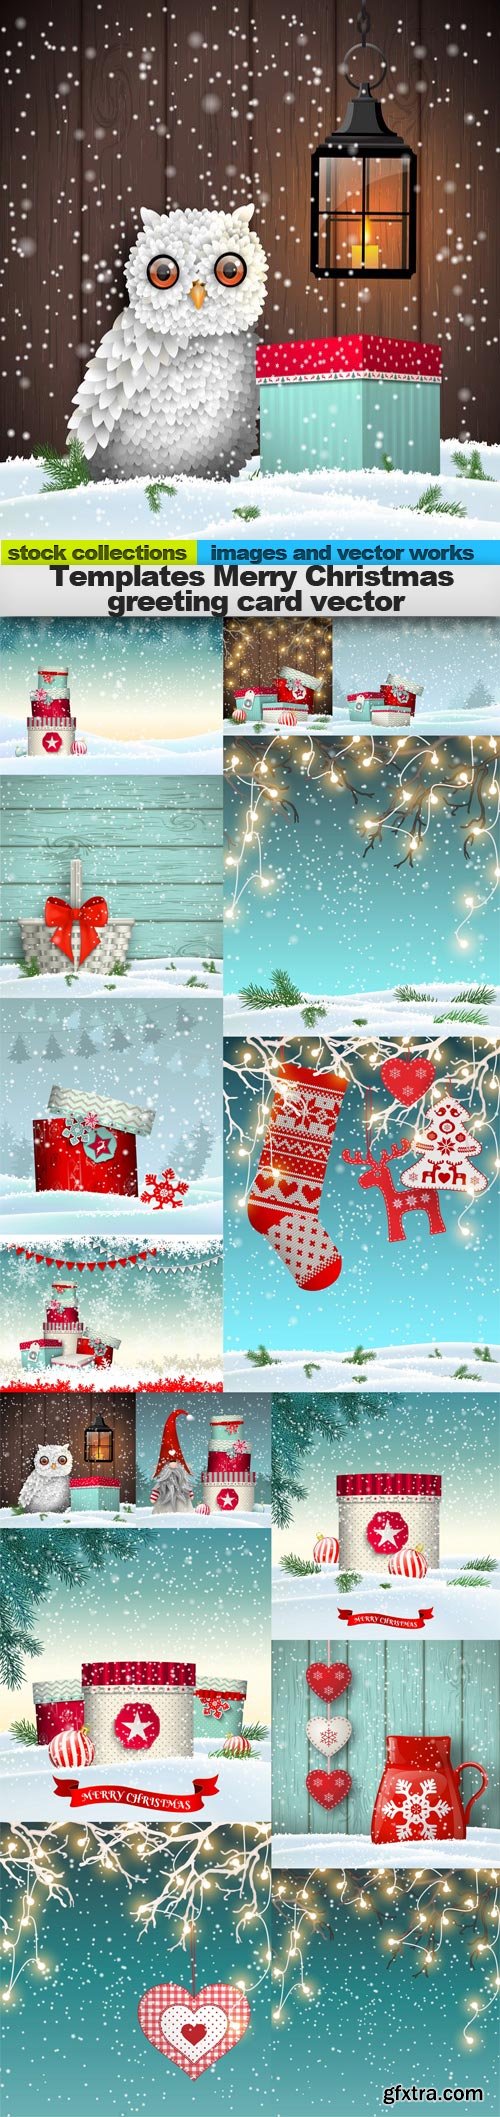 Templates Merry Christmas greeting card vector, 15 x EPS